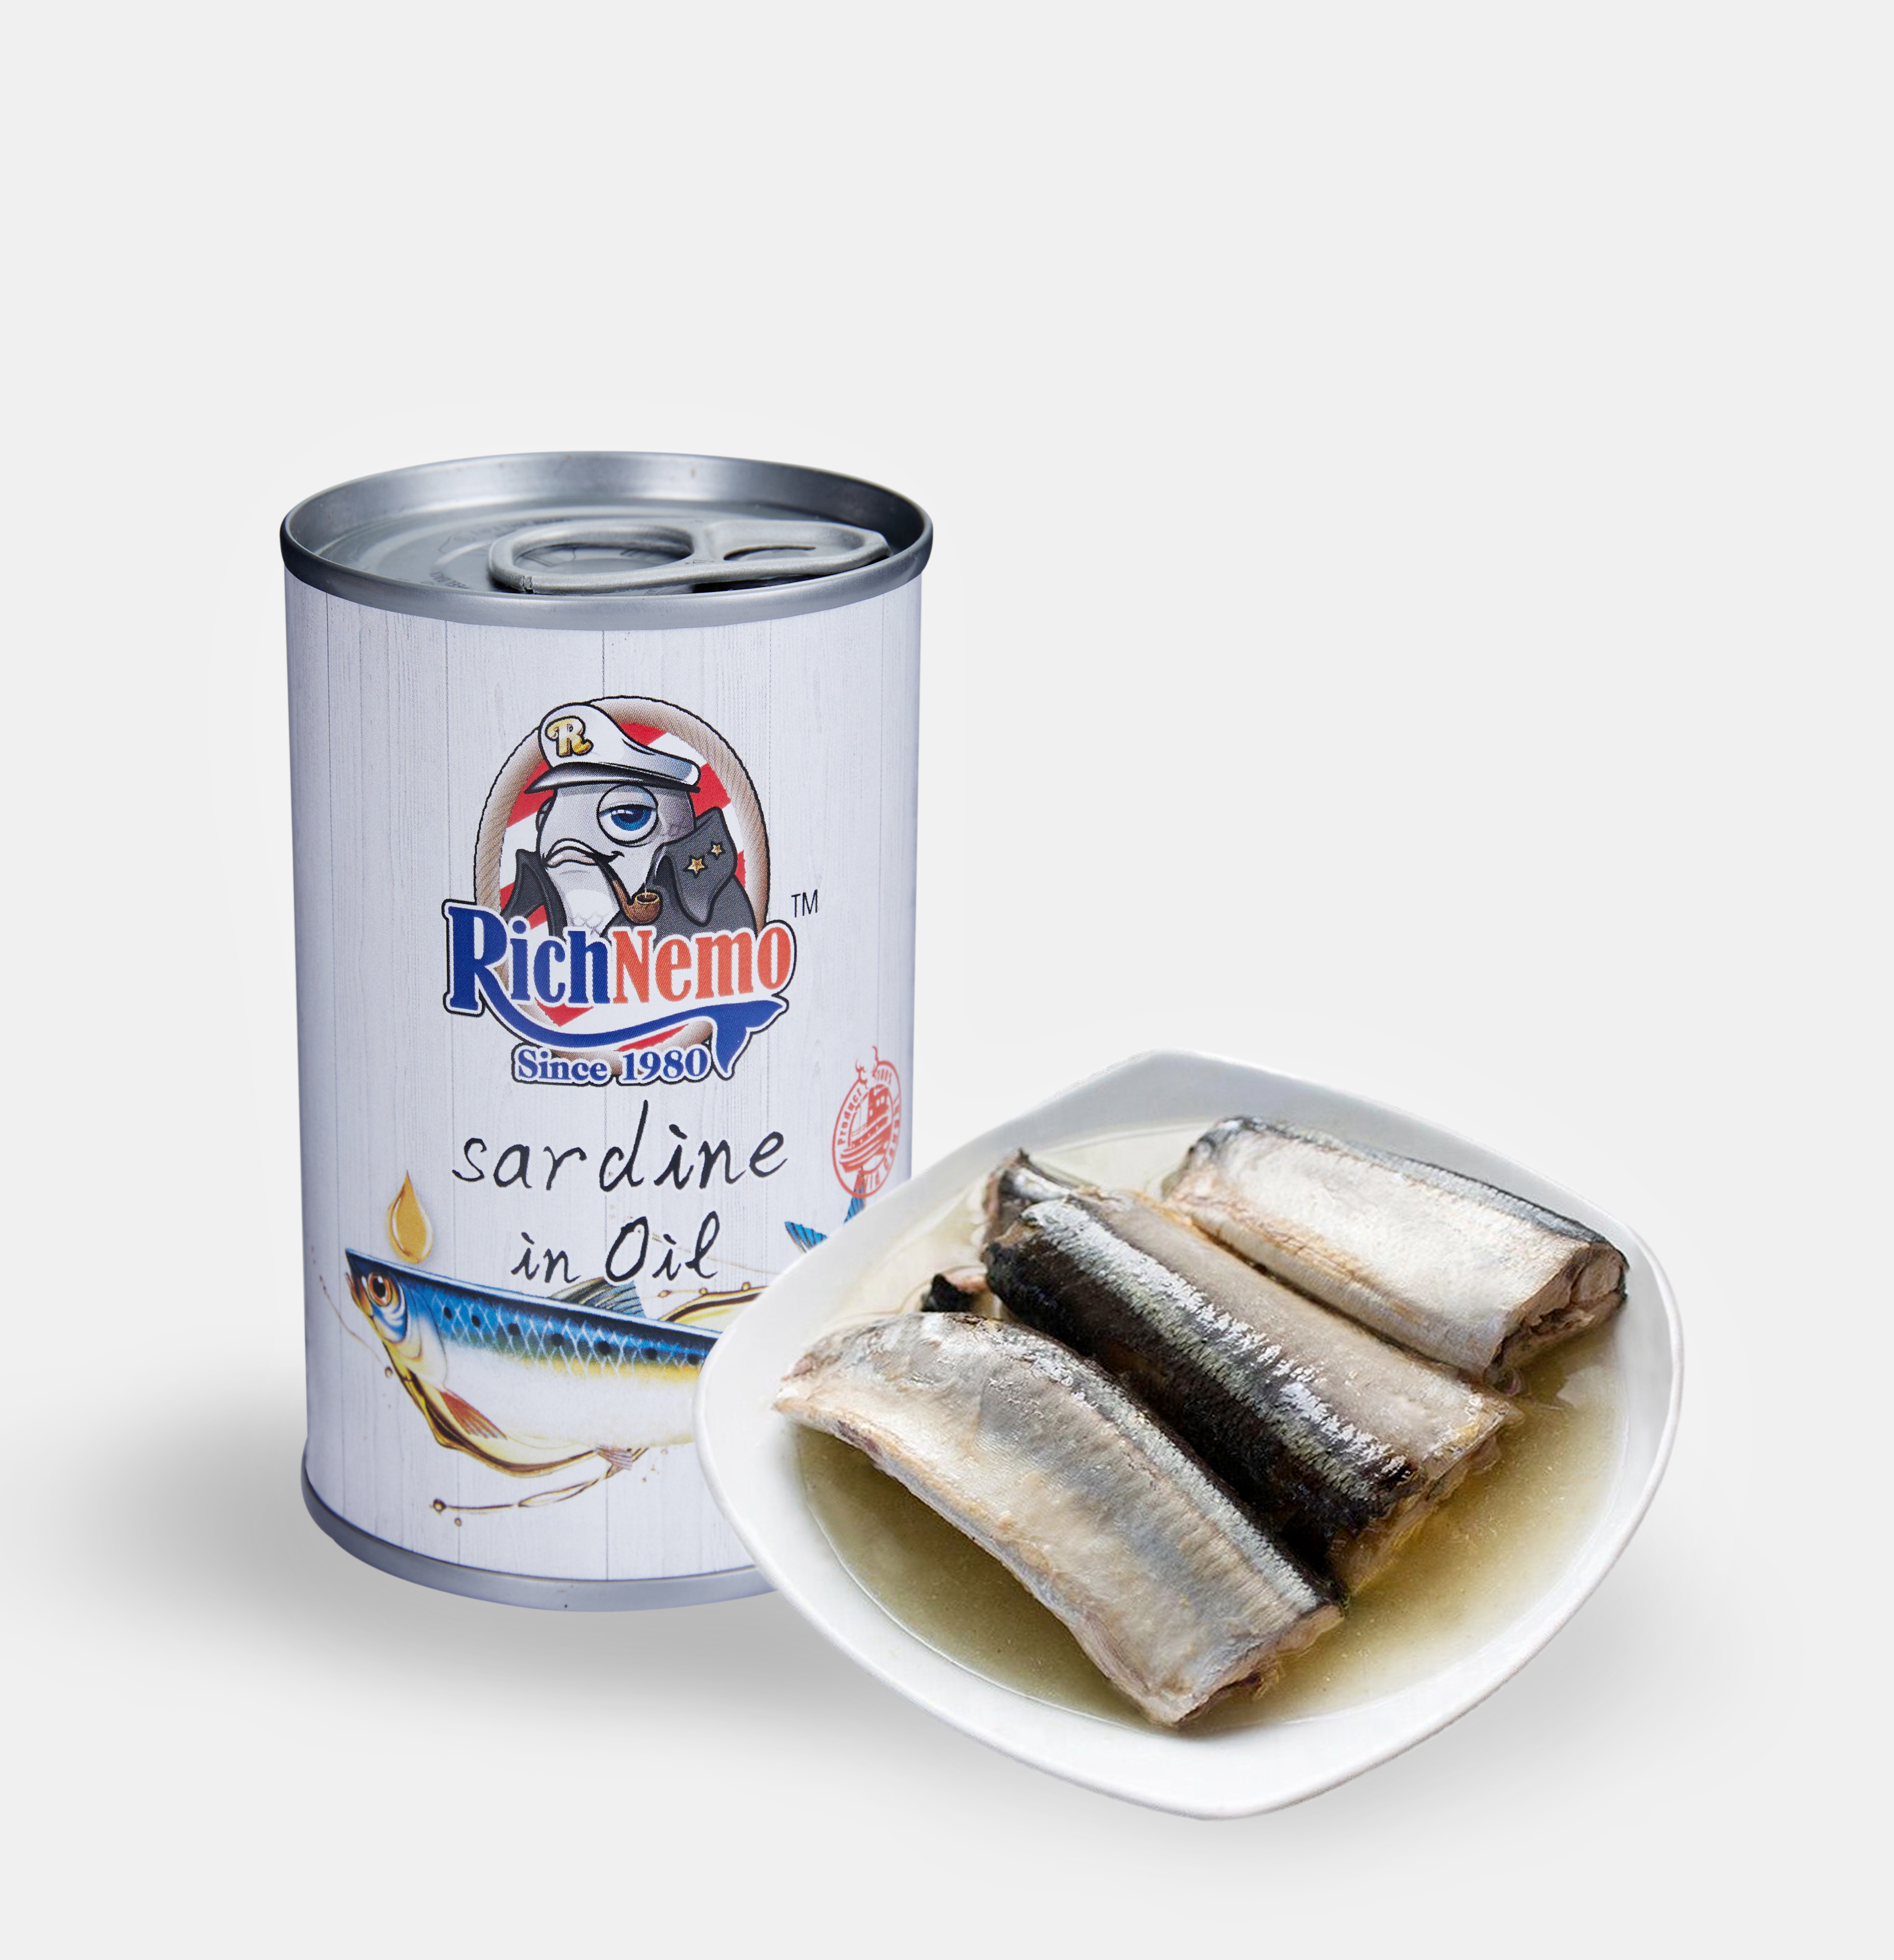 Delicious Recipe Ideas Using Canned Sardine in Oil